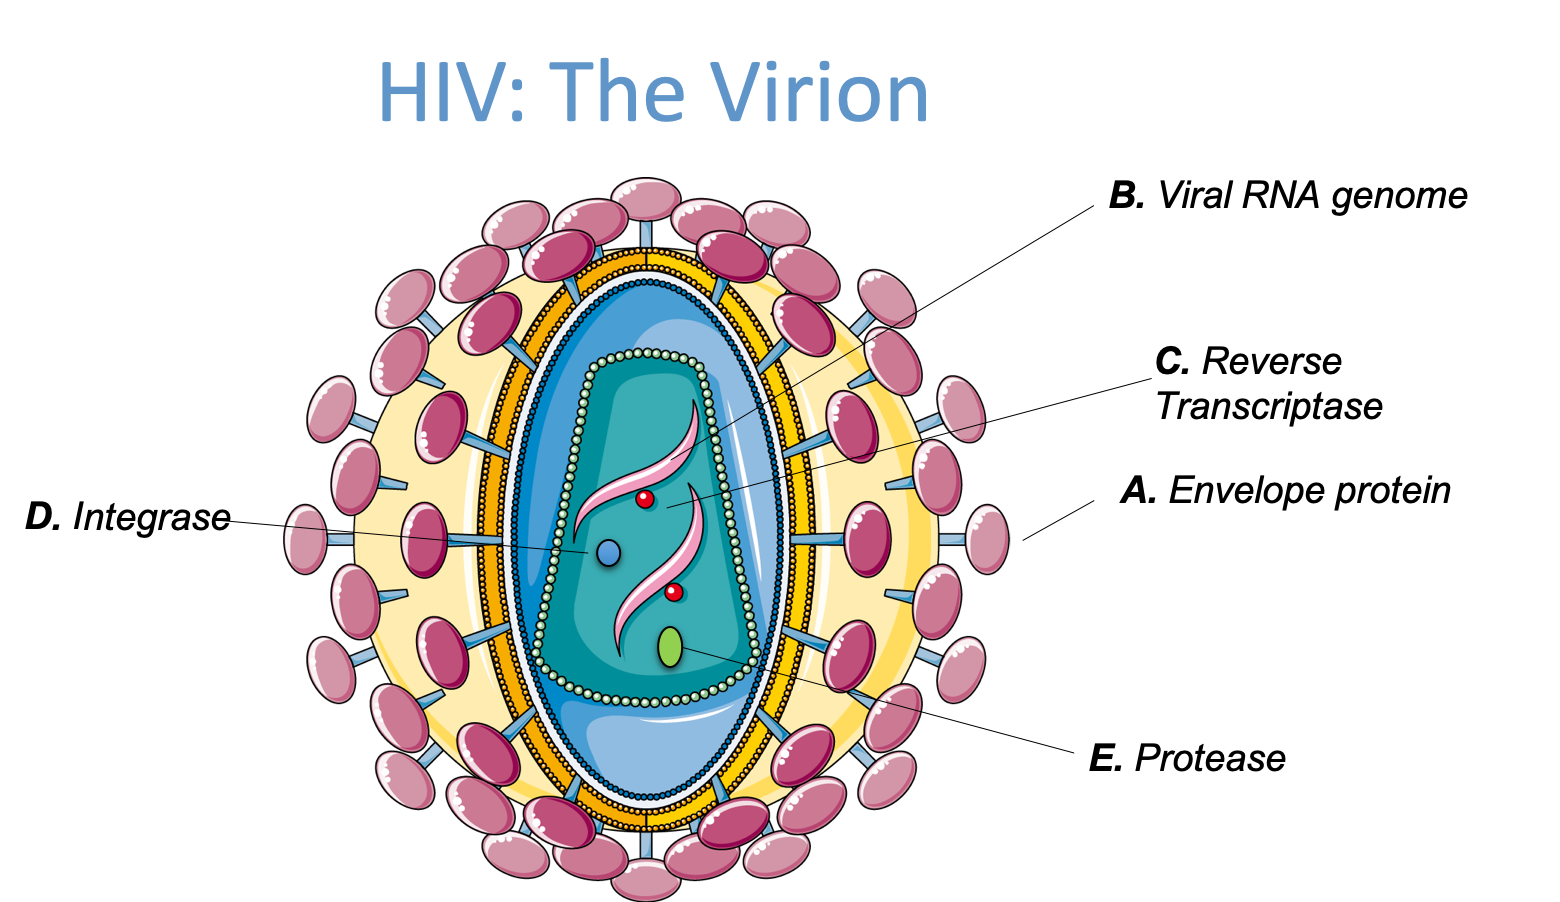 Retroviridae вирус. Схема строения вириона ВИЧ. Строение вириона. Структура вириона. Human immunodeficiency virus